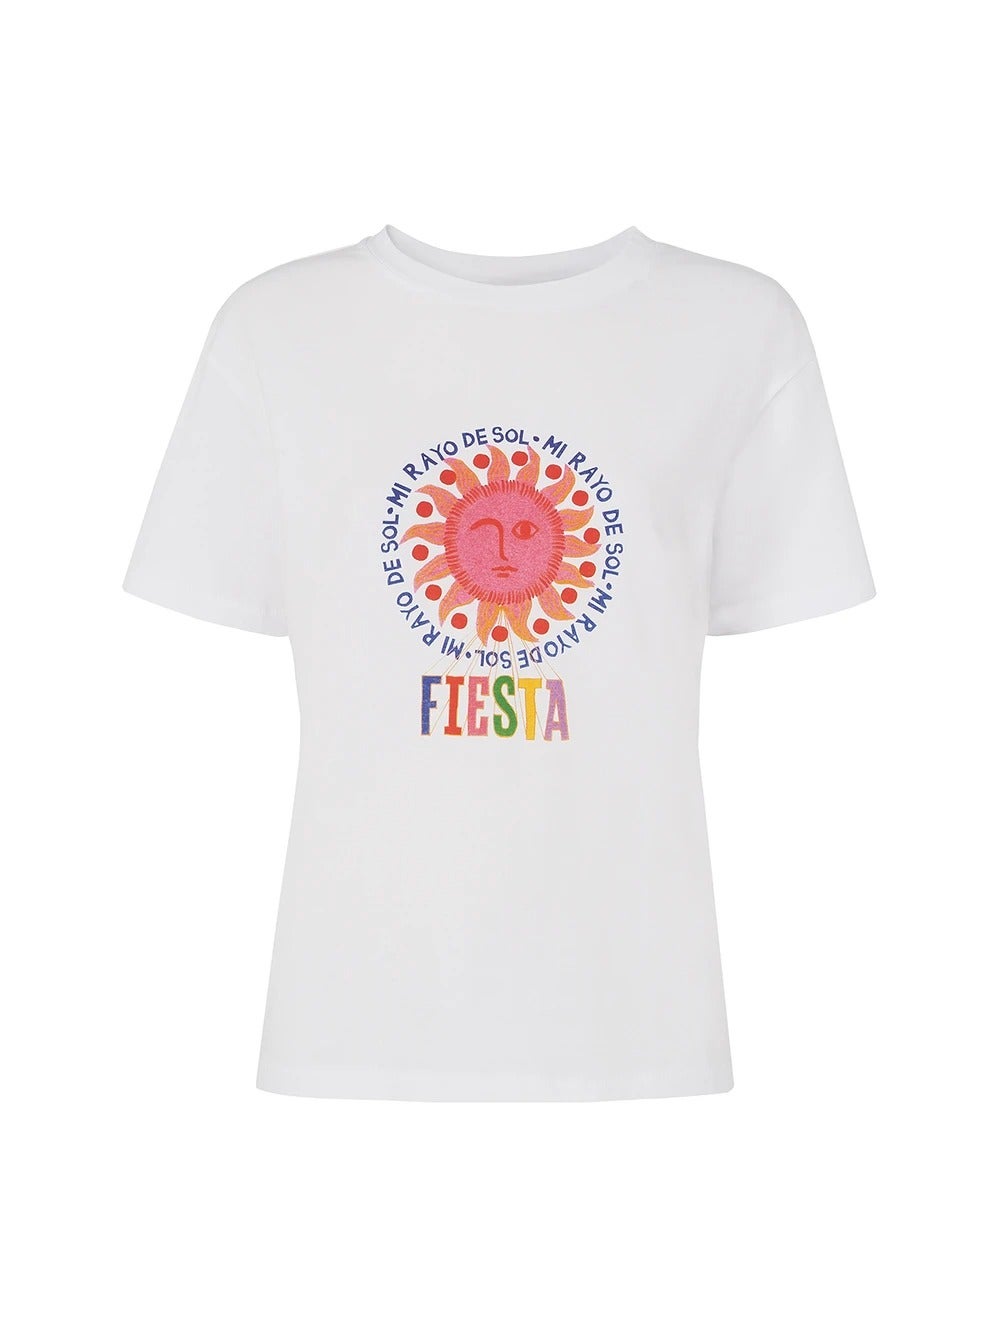 Kitri + Fiesta Print T-shirt